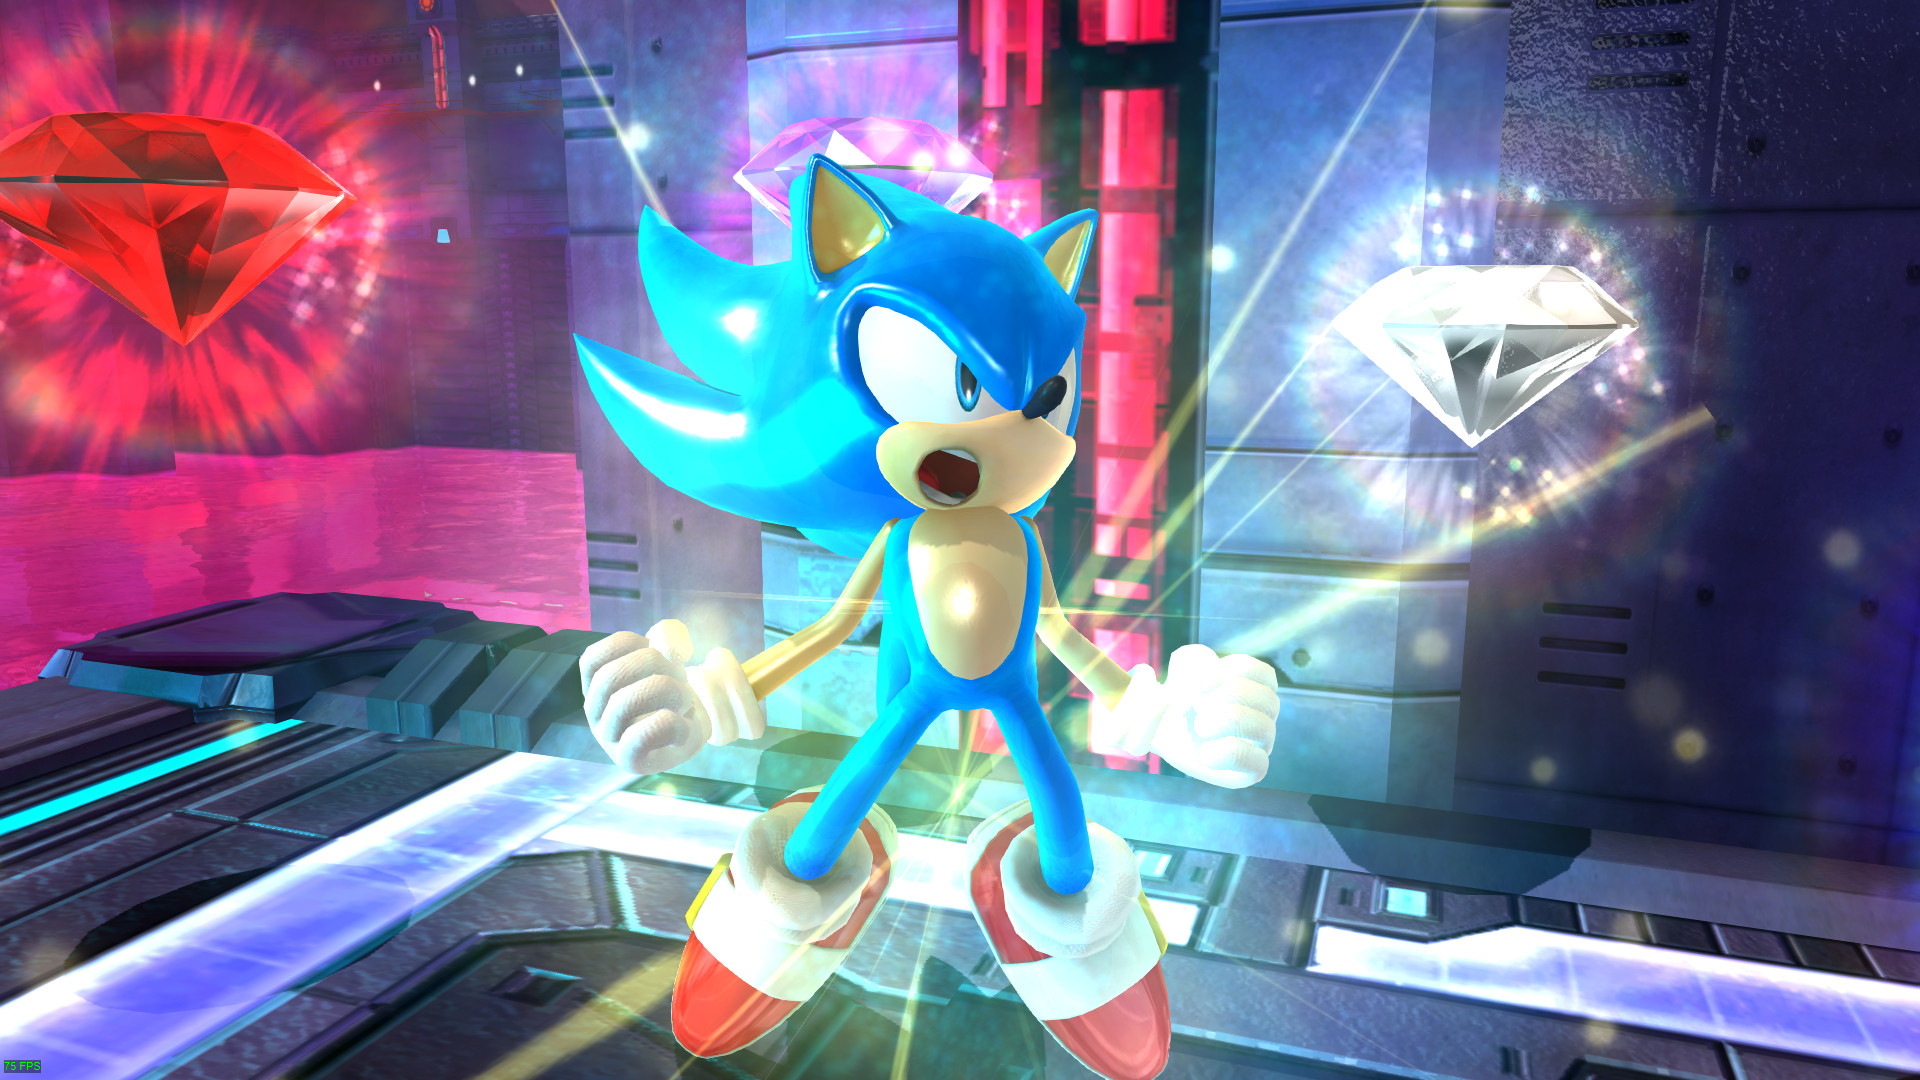 Super Sonic Blue #sonicthehedgehog #supersonic #supersaiyan